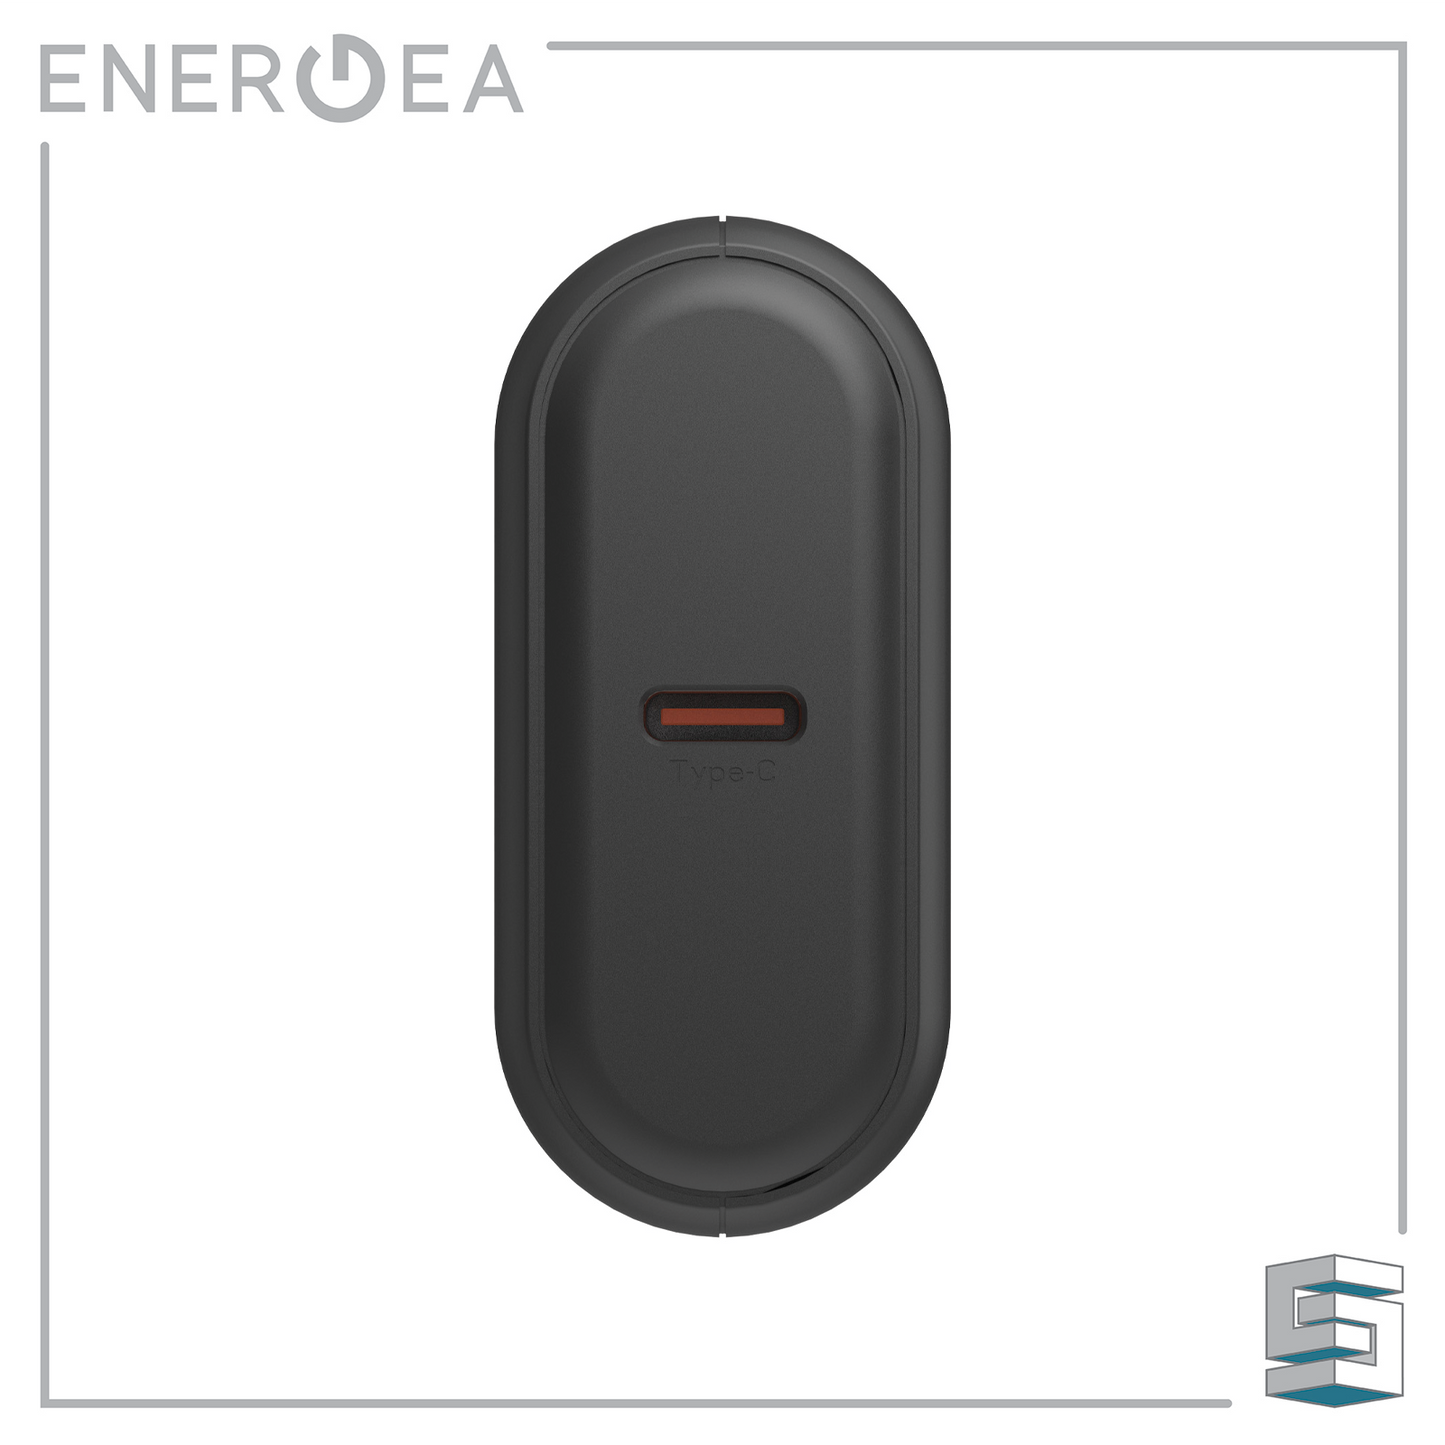 Power Bank 10000mAh - ENERGEA ComPac Mini 3 Global Synergy Concepts